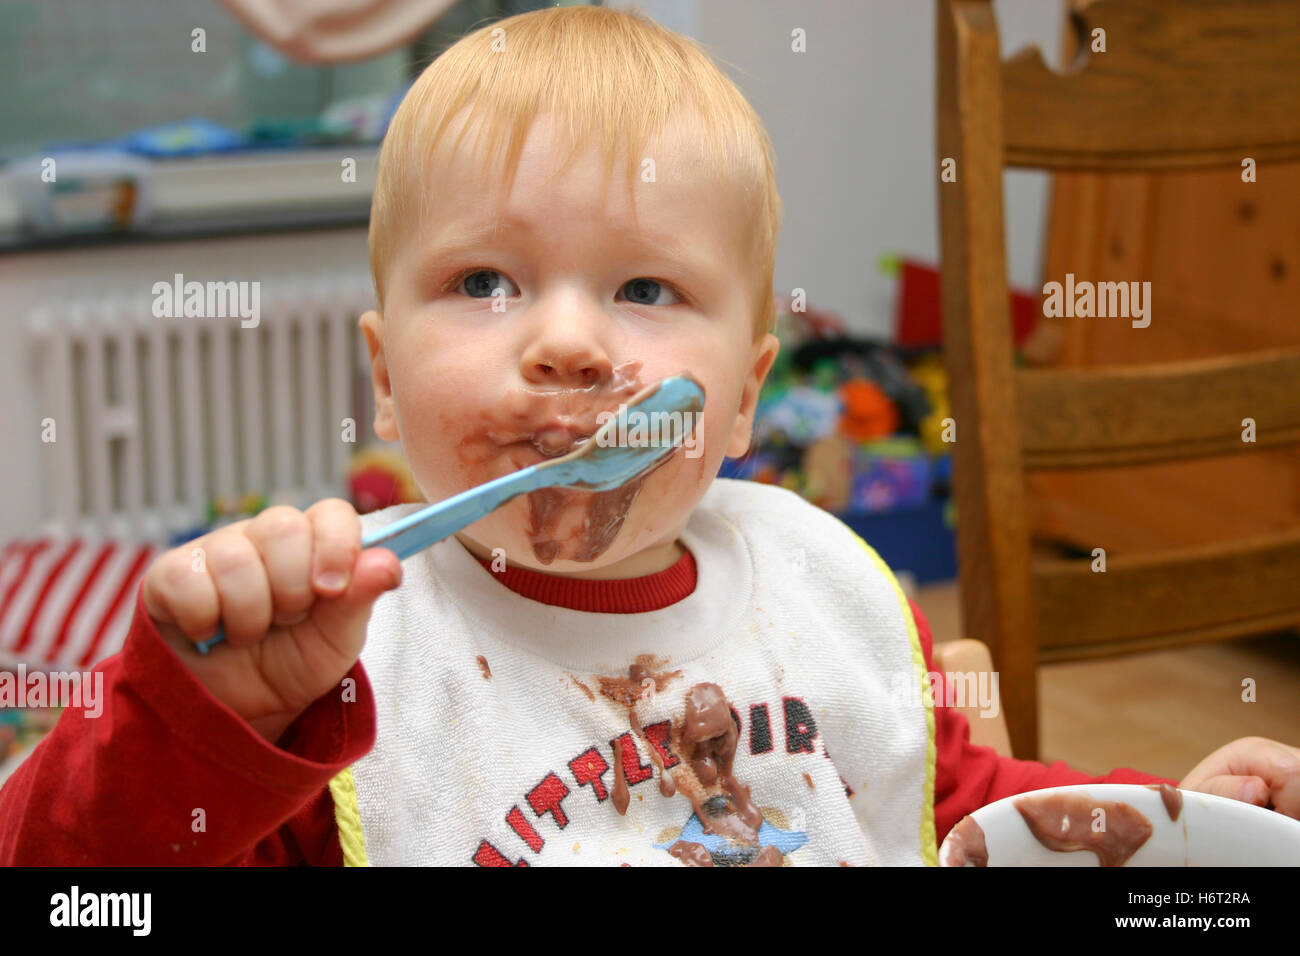 small child eats Stock Photo